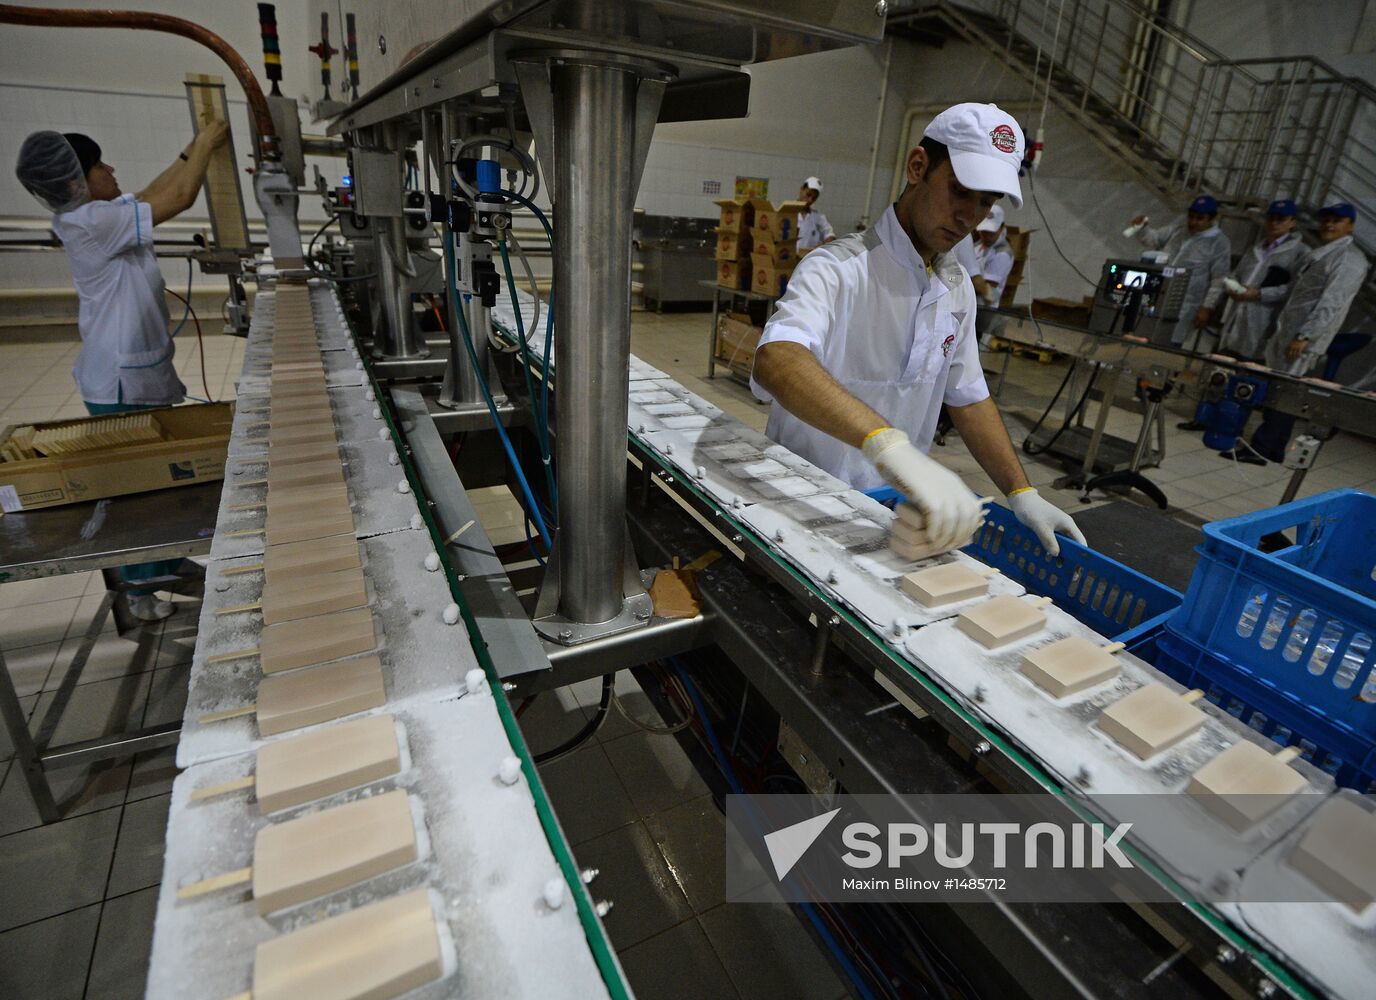 Production of ice cream at Chistaya Liniya factory